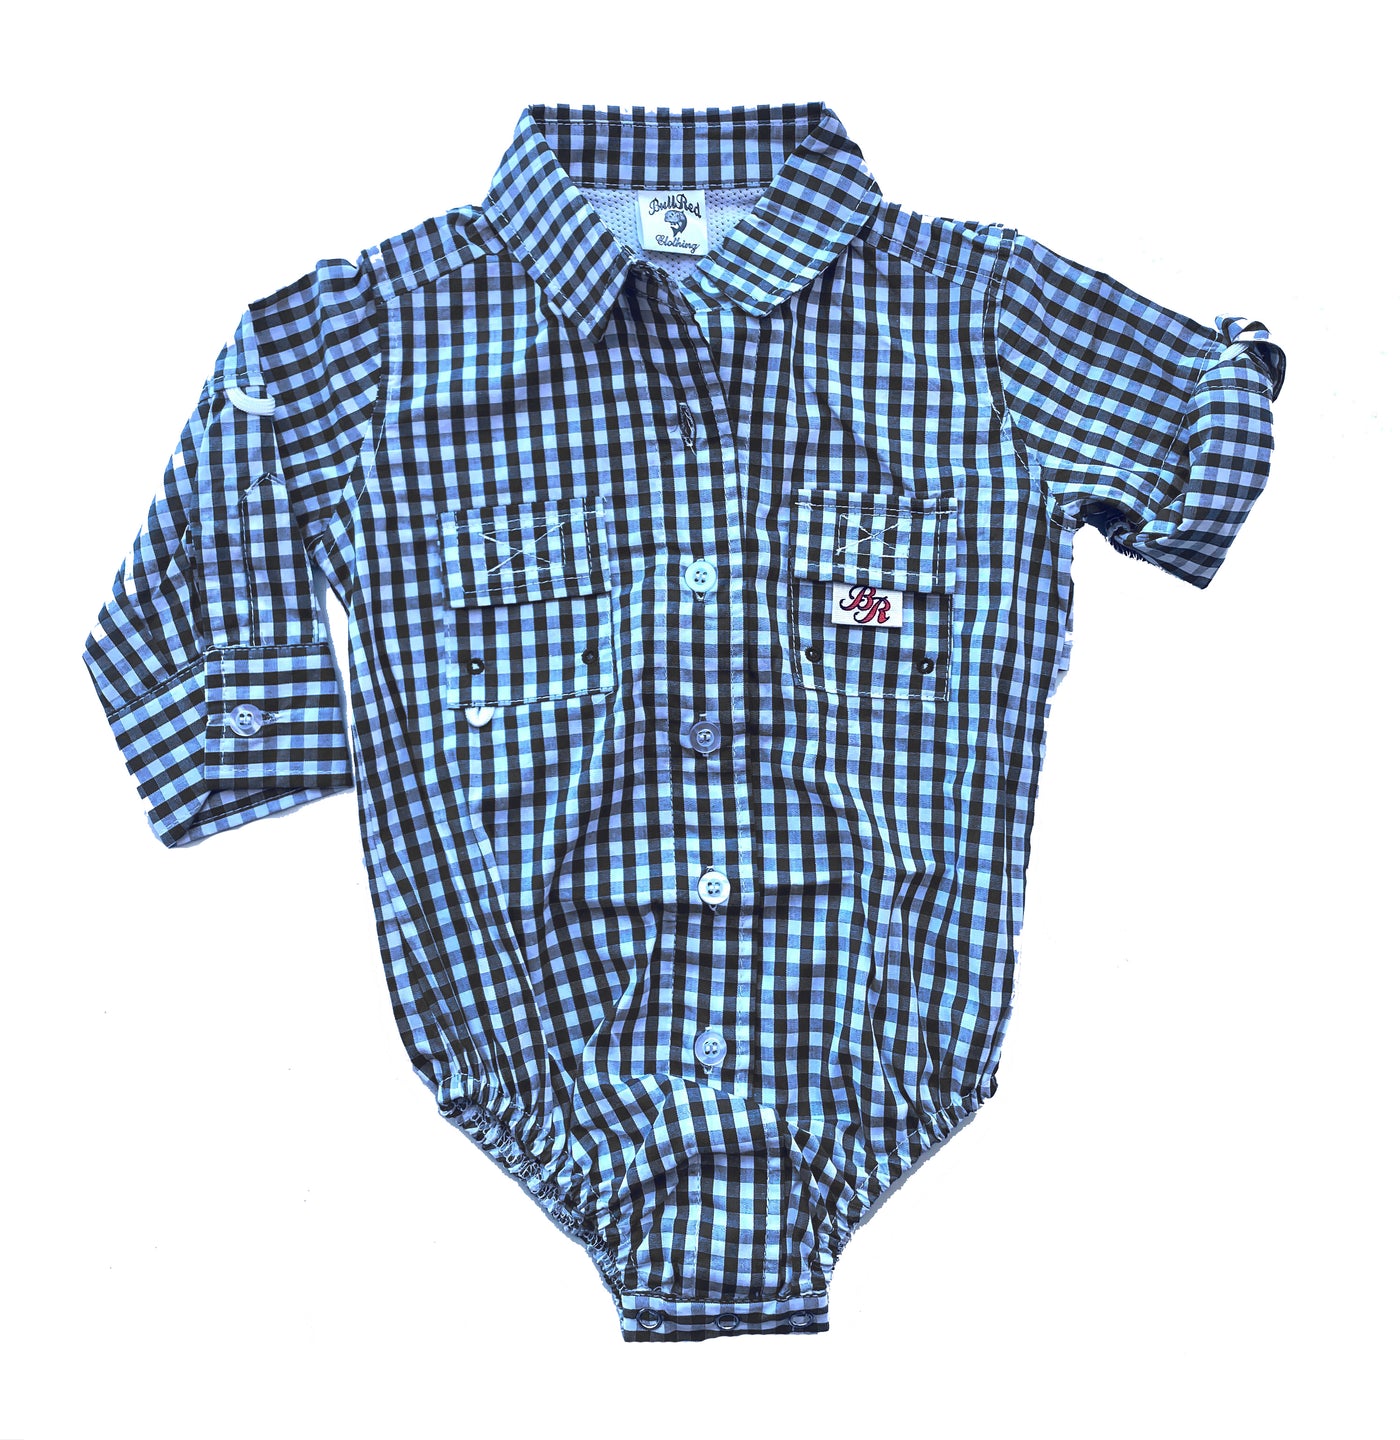 Baby/Infant Fishing Onesies - BullRed Clothing Inc.